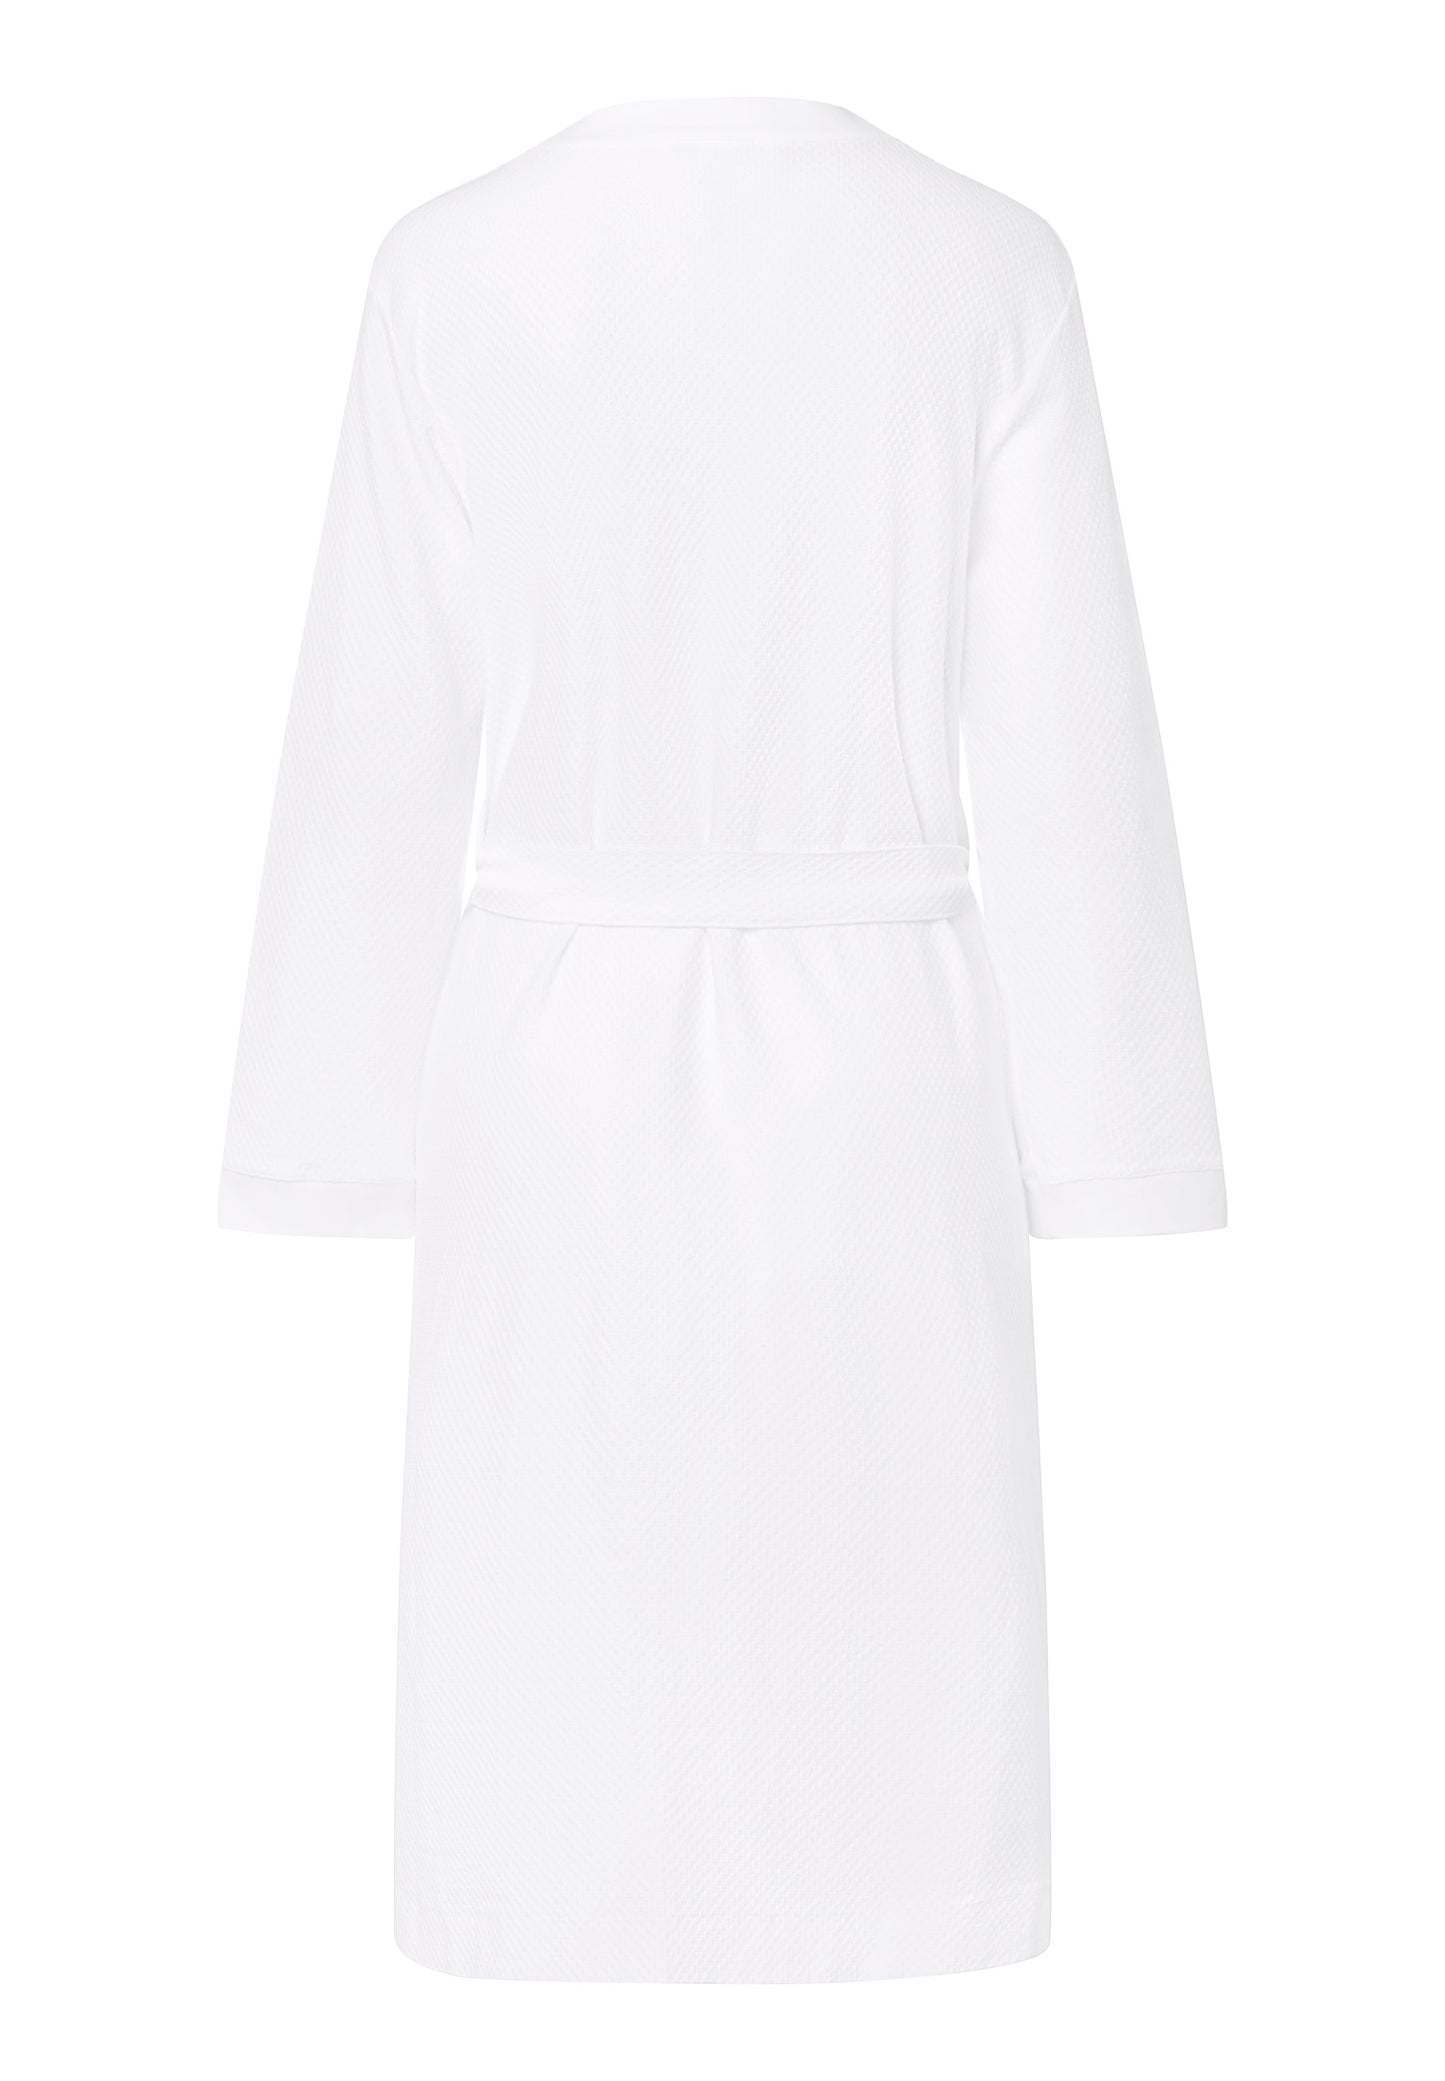 HANRO White Selection Robe